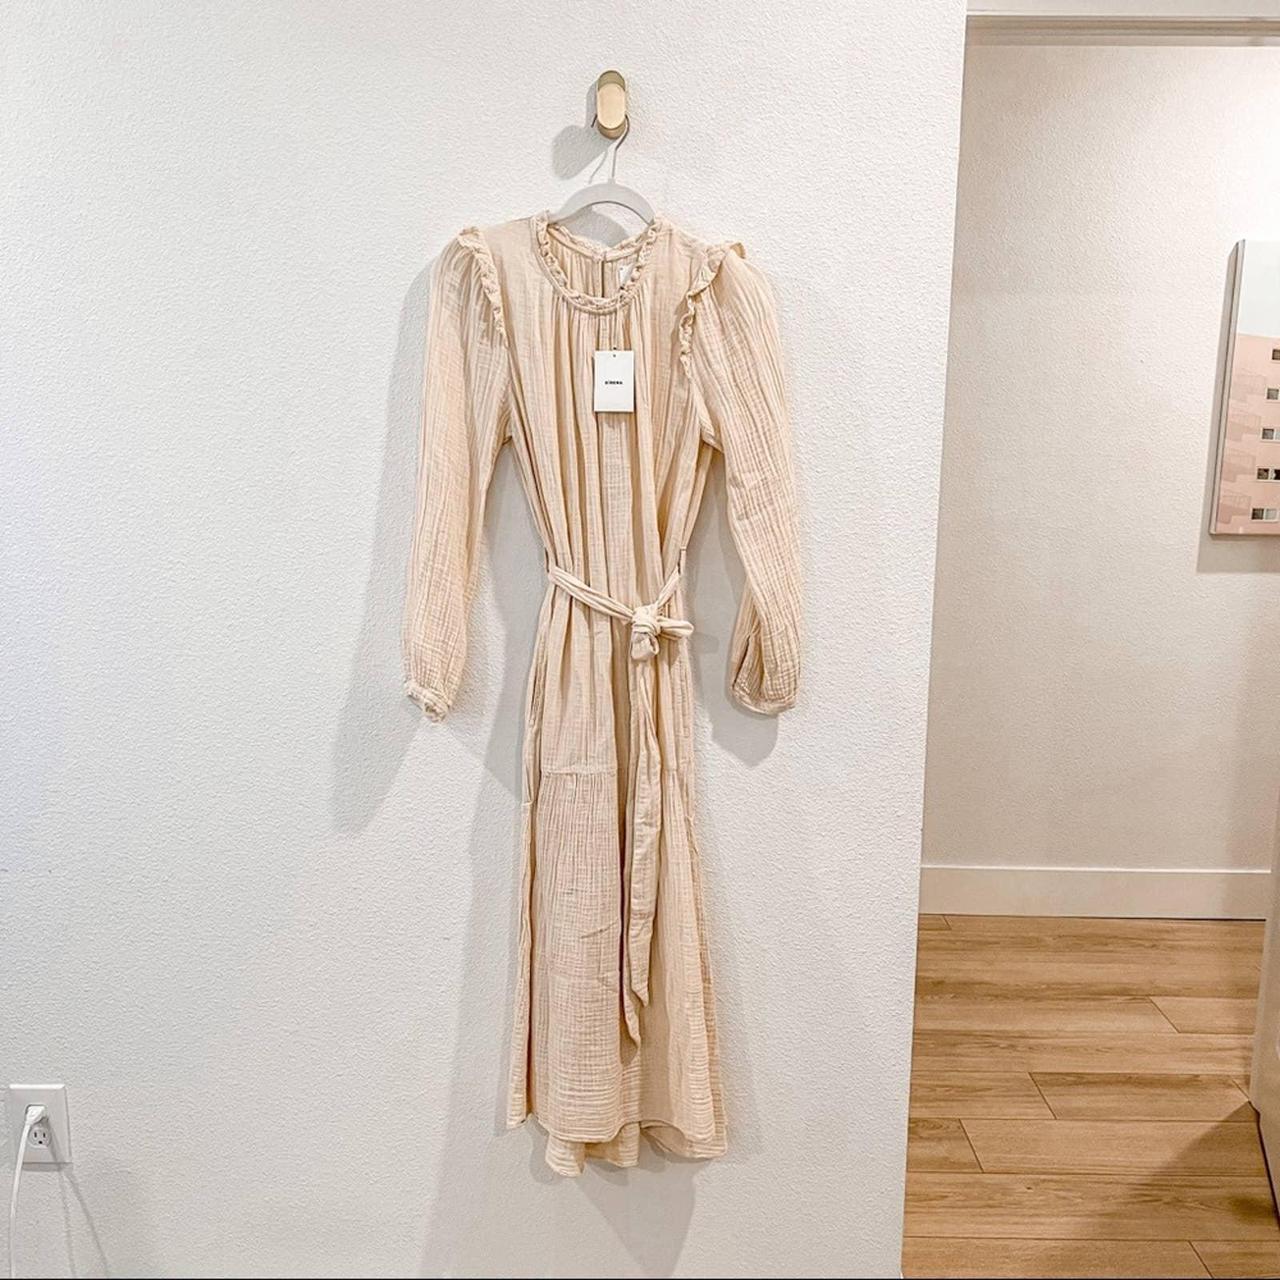 Product Image 1 - Iconic Xirena Gauze Mia Dress
Ruffle